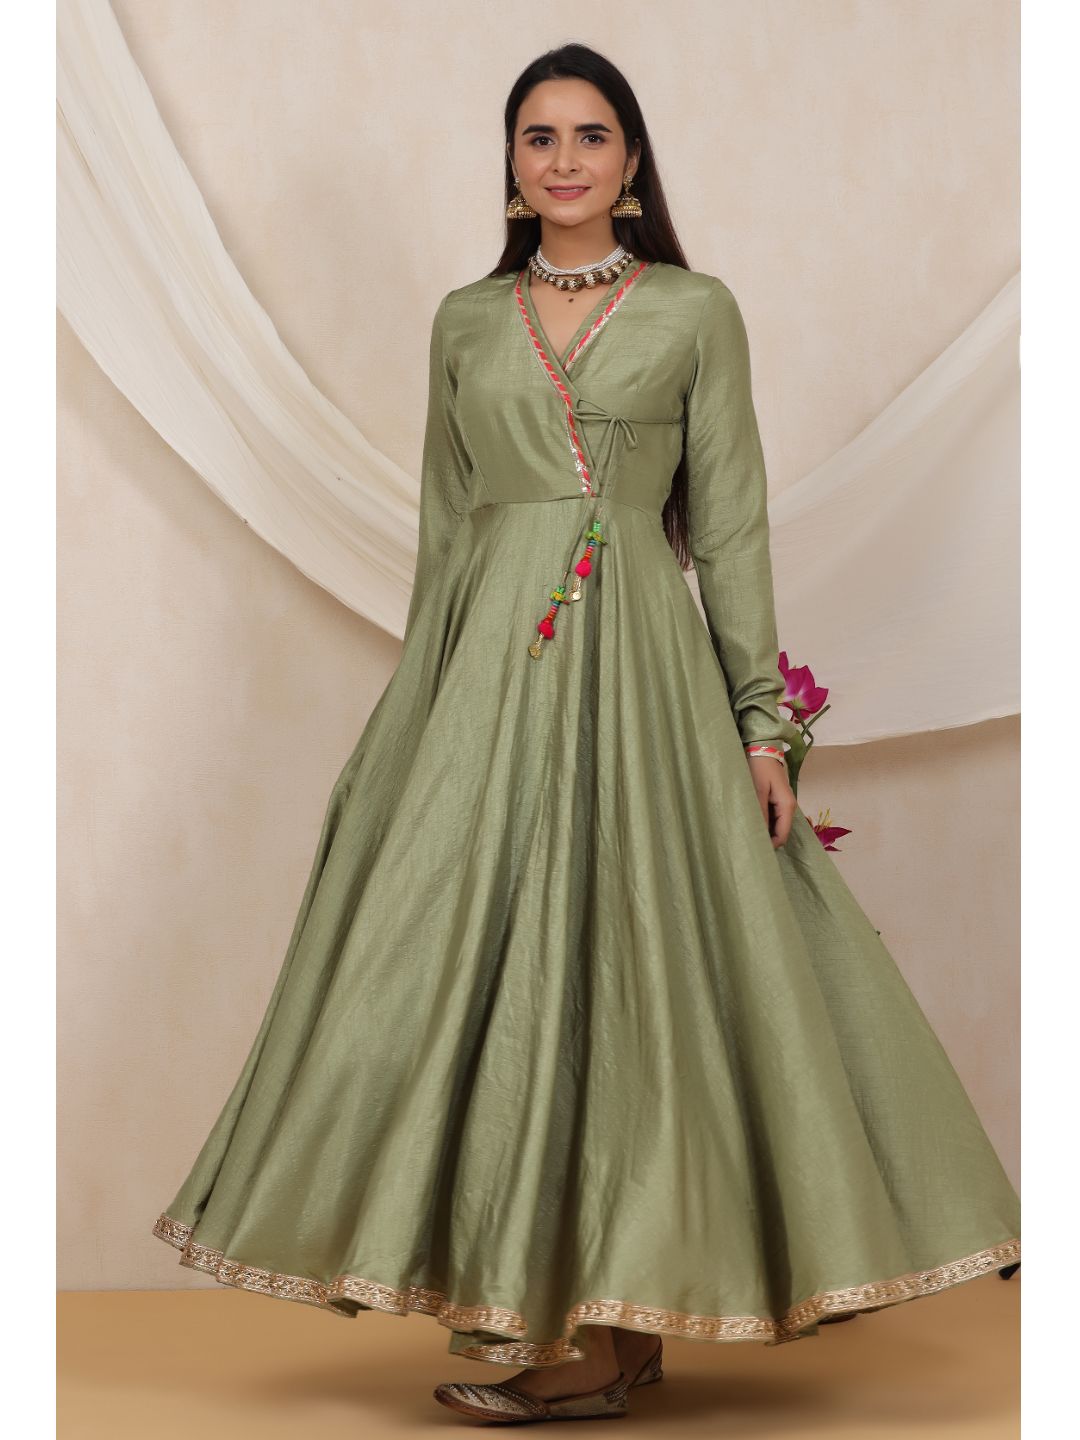 Elegant and Heavy Indian Ethnic Dress